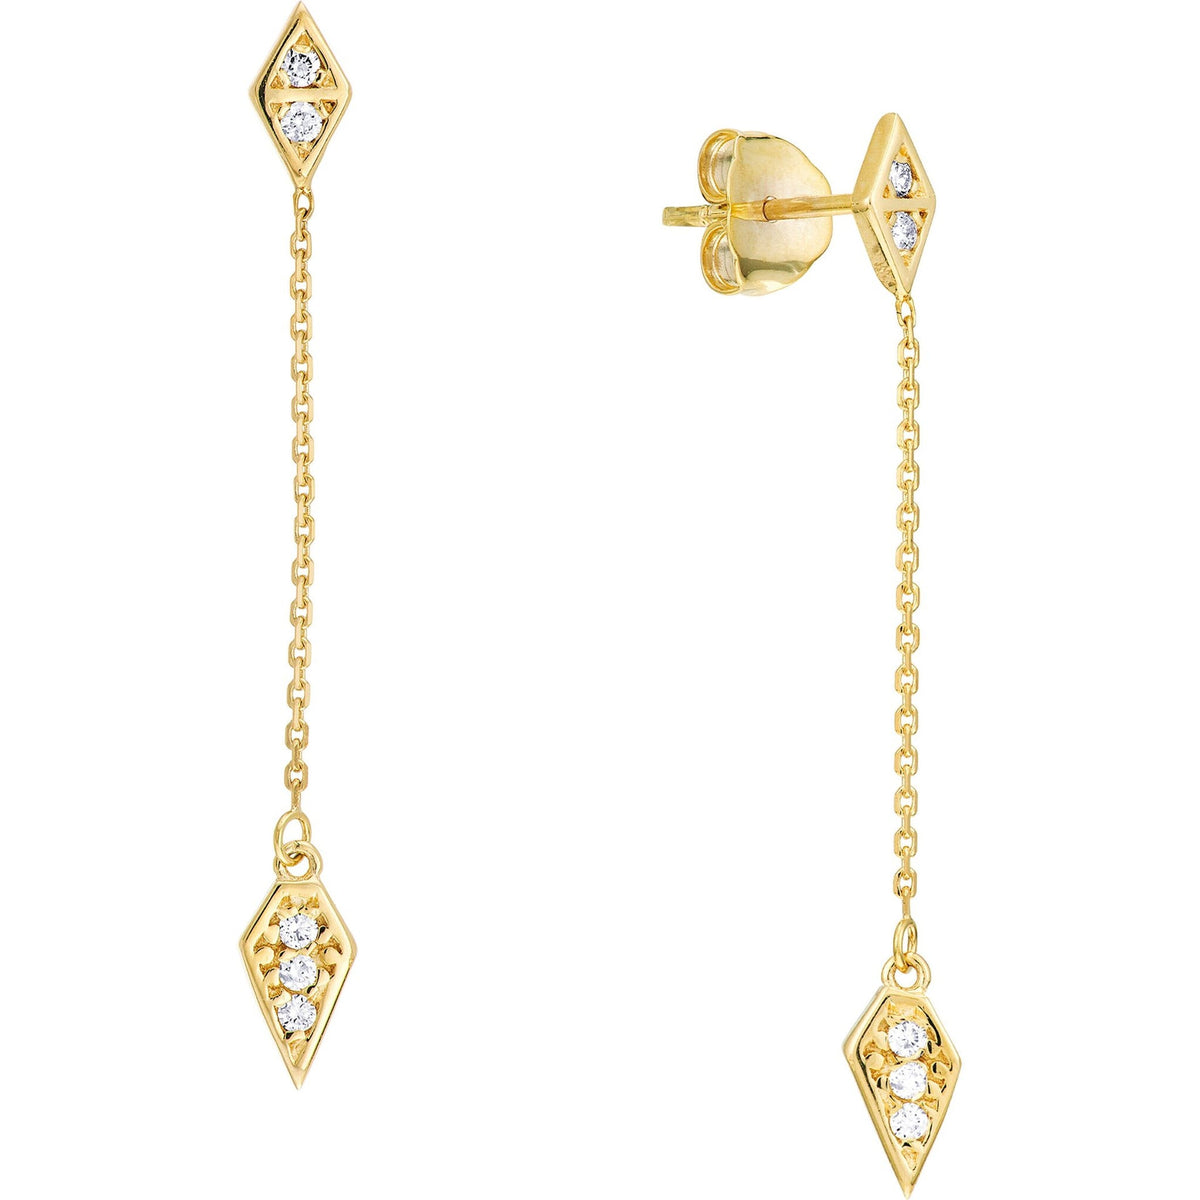 Elegant Yellow Gold Diamond Kite Dangle Earrings from Robinson's Jewelers